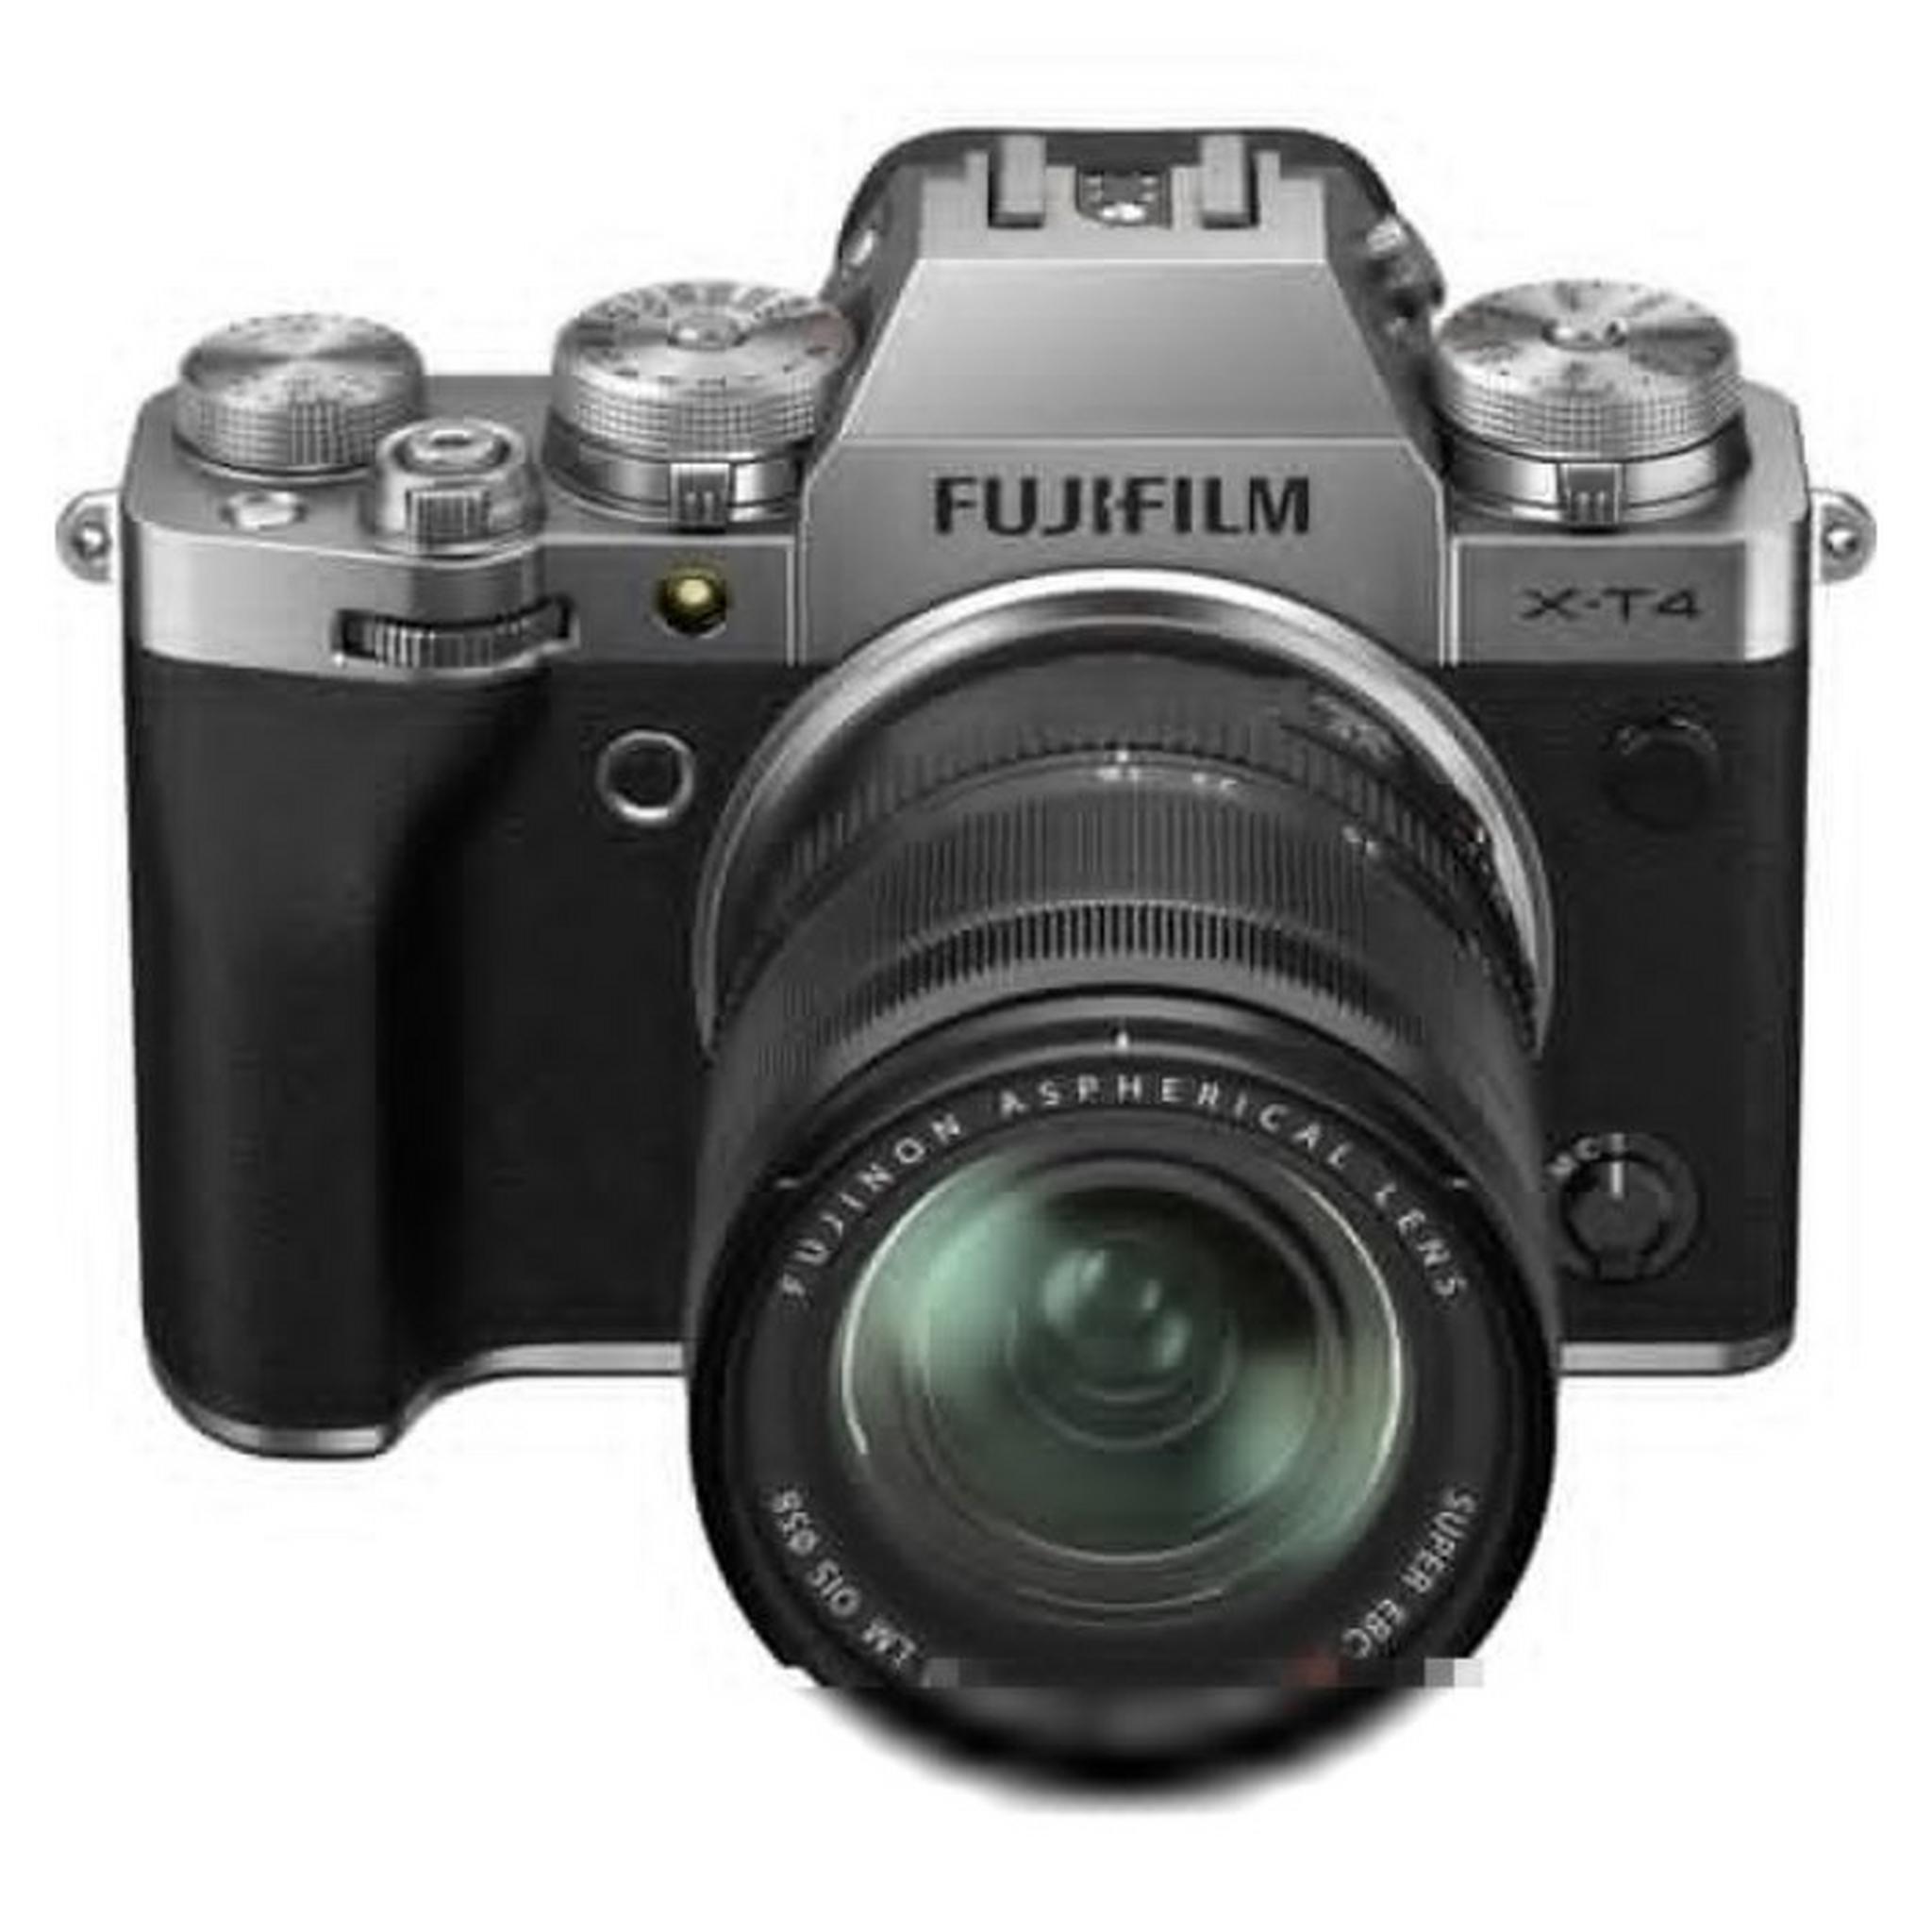 Fujifilm X-T4 Mirrorless Digital Camera with 18-55mm Lens - Silver